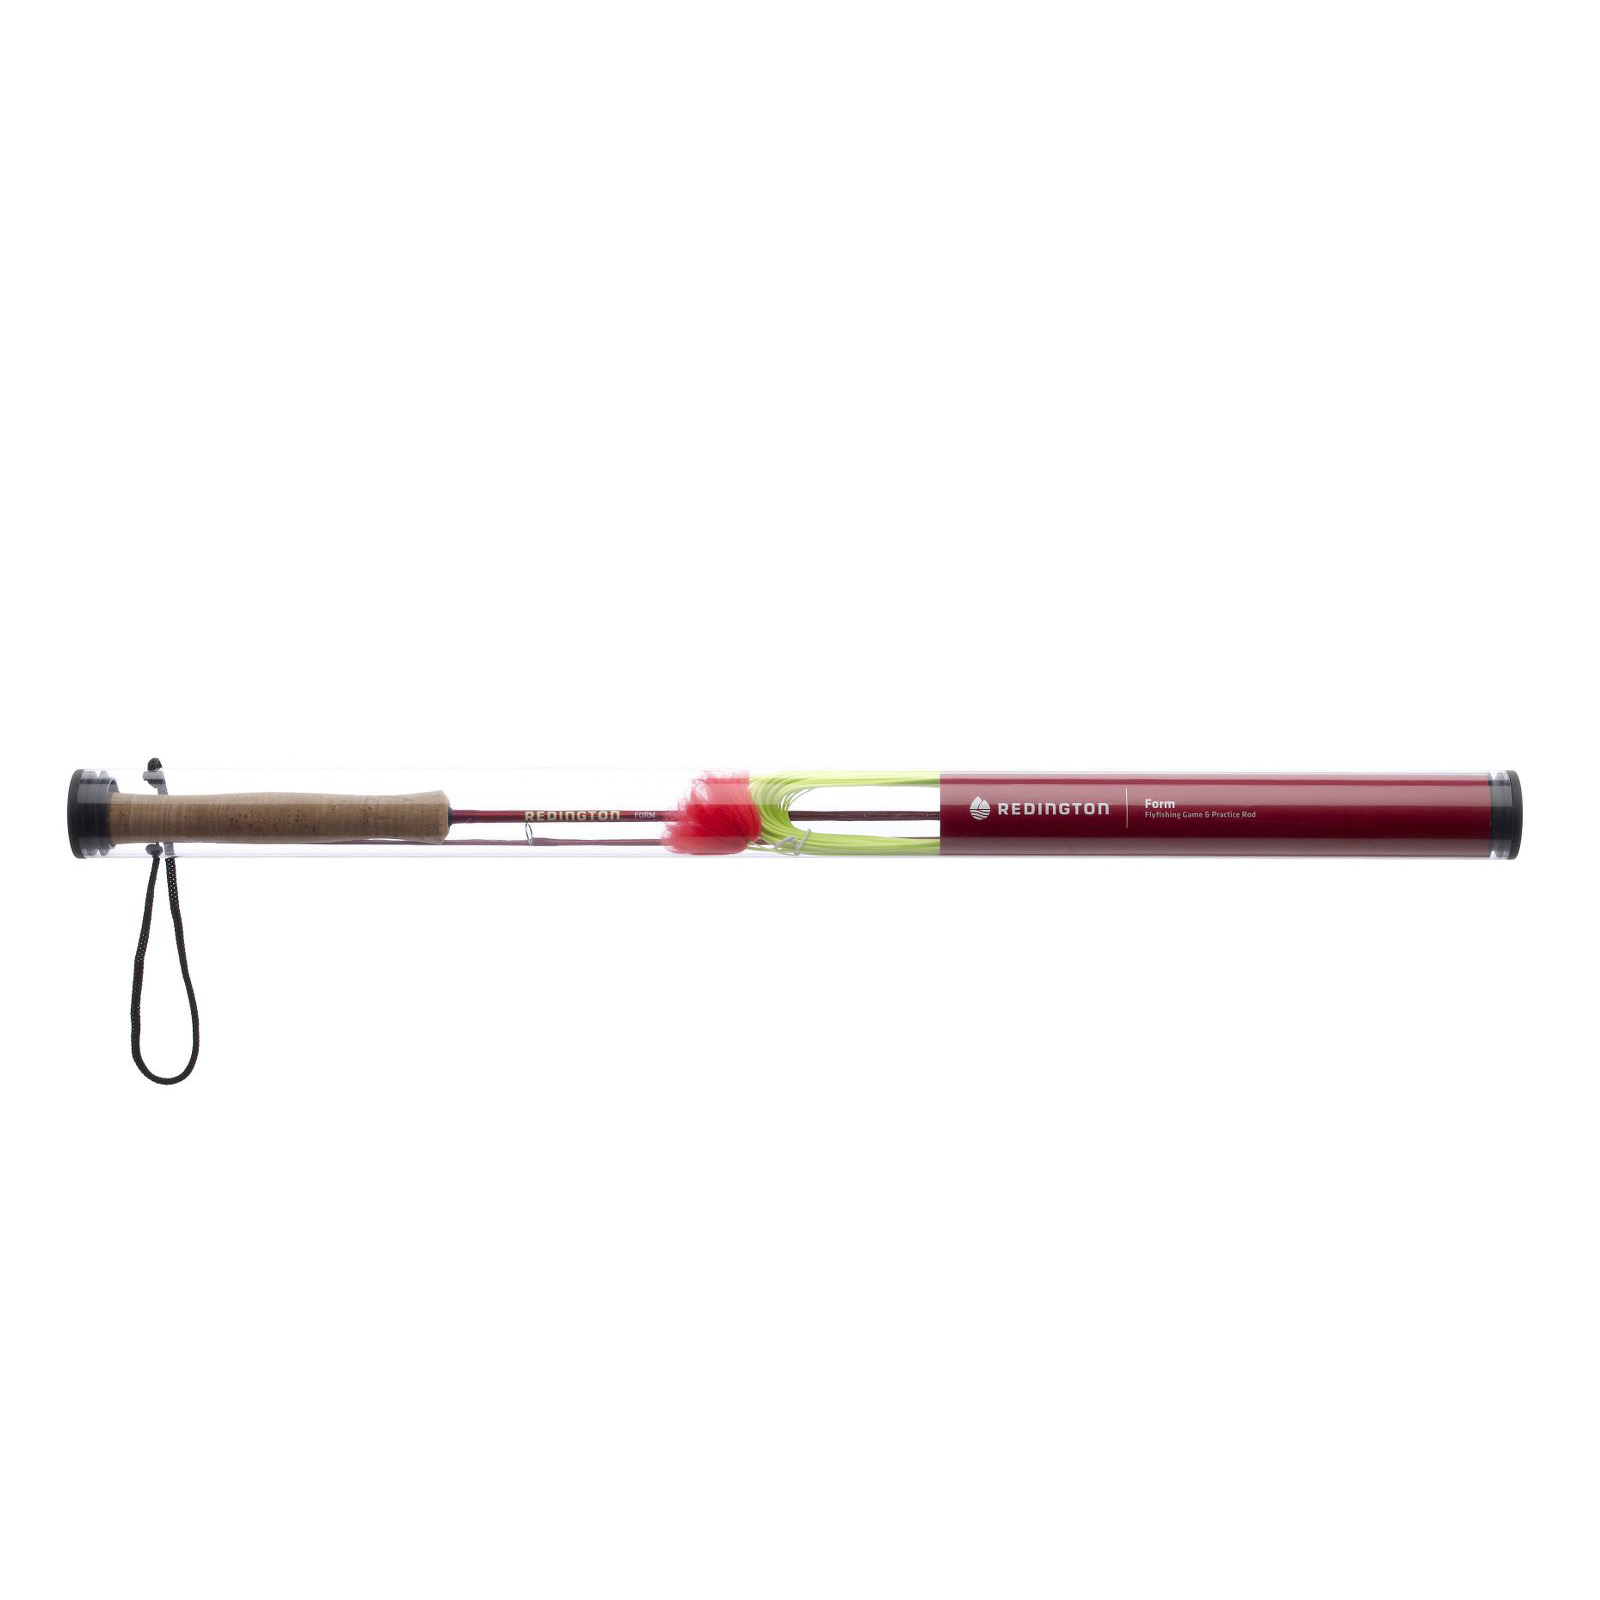 Redington Practice Fly Rod aka Micro Fly Rod #flyfishing 